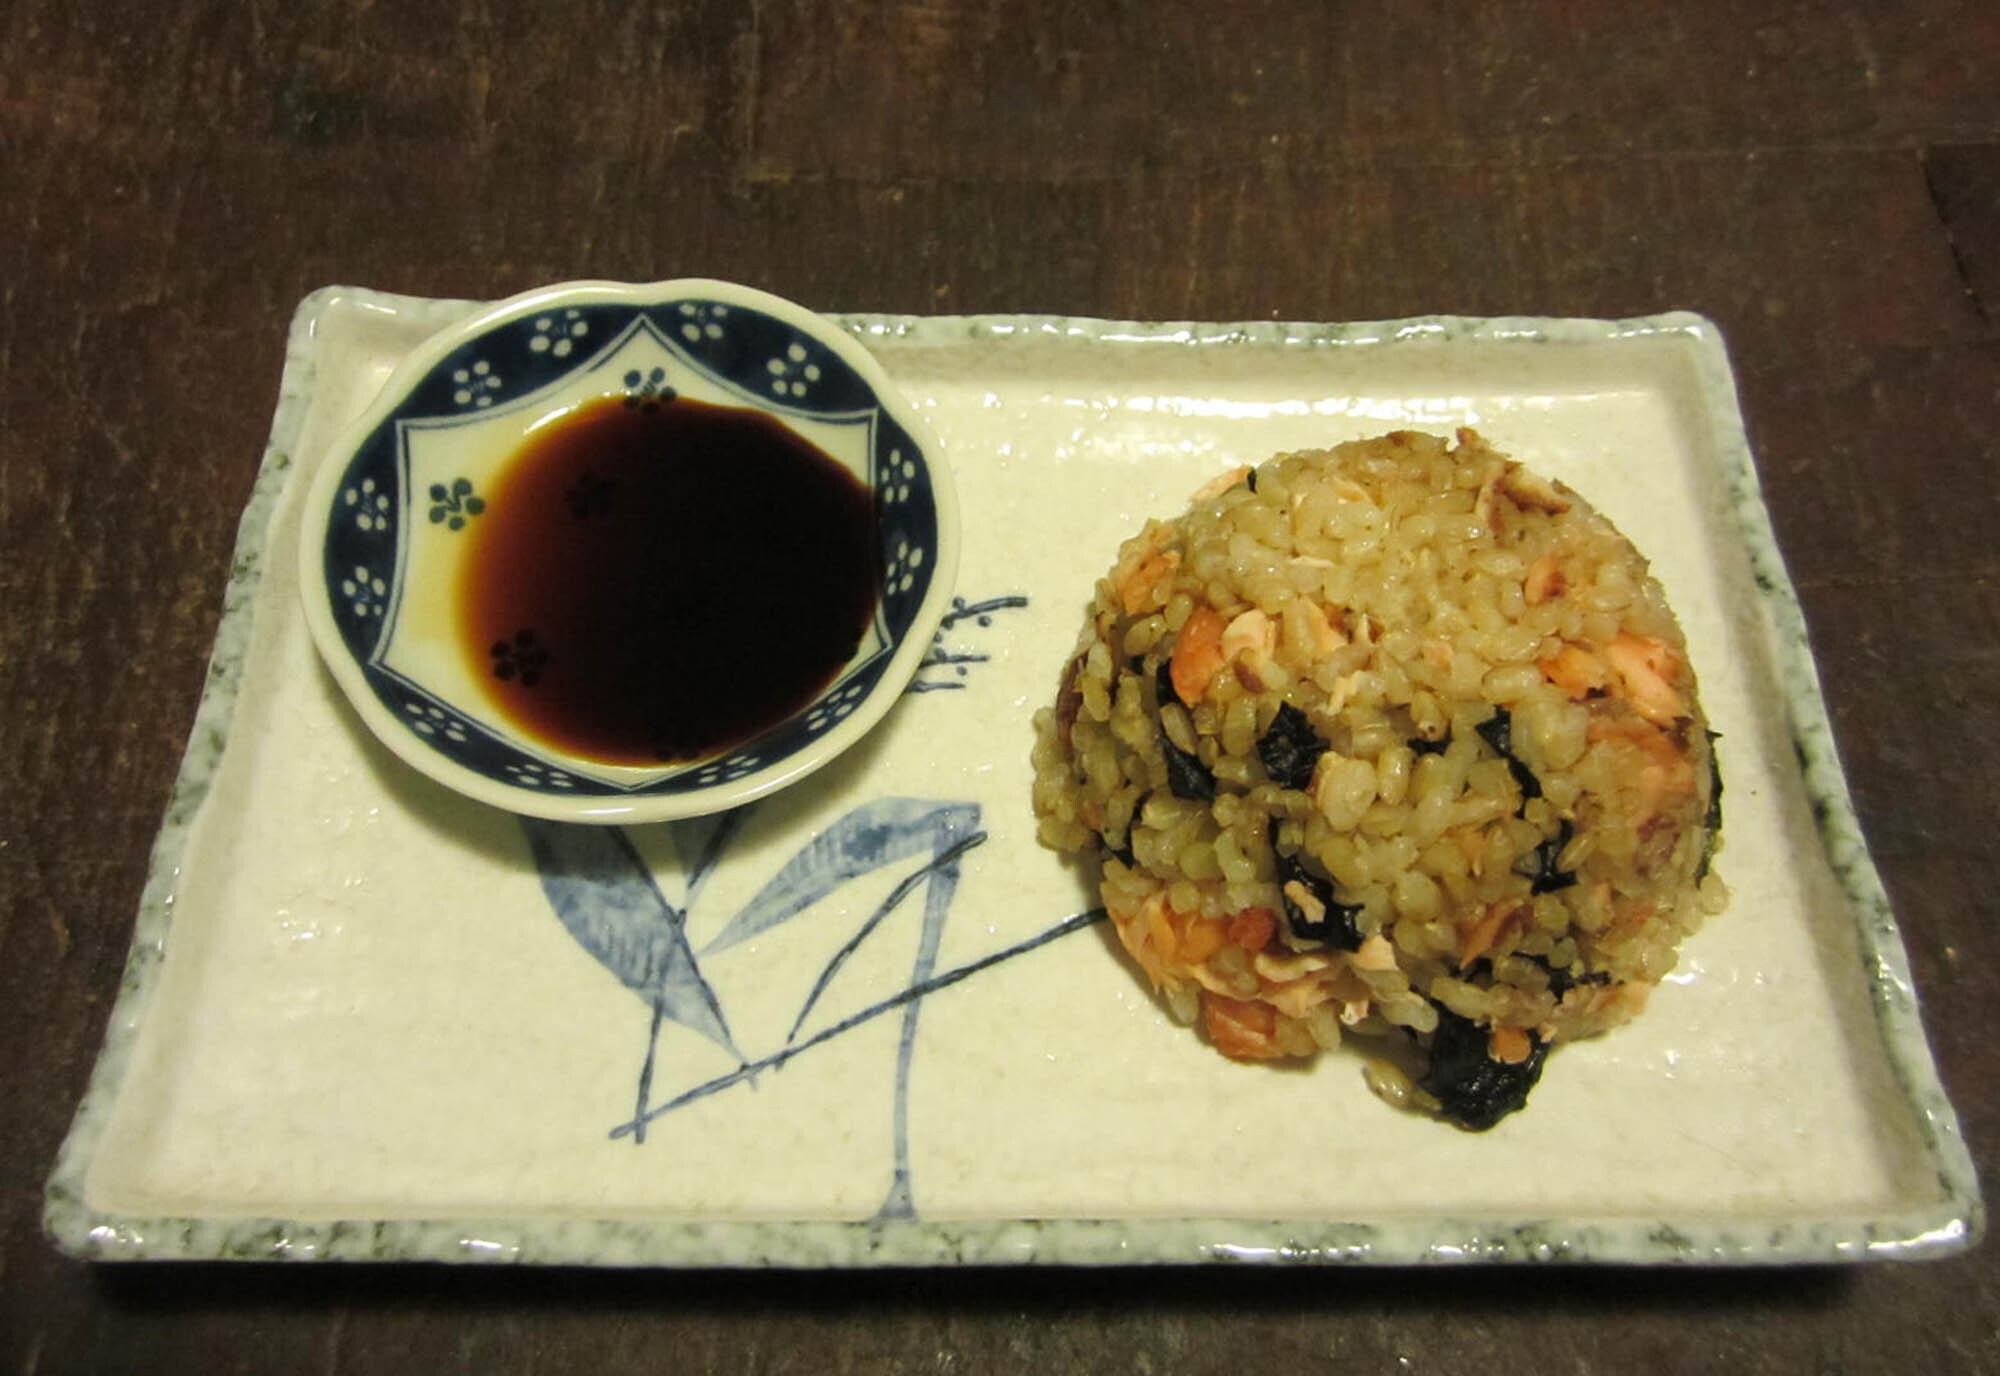 Japanese with salmon and a side of SAN-J Tamari